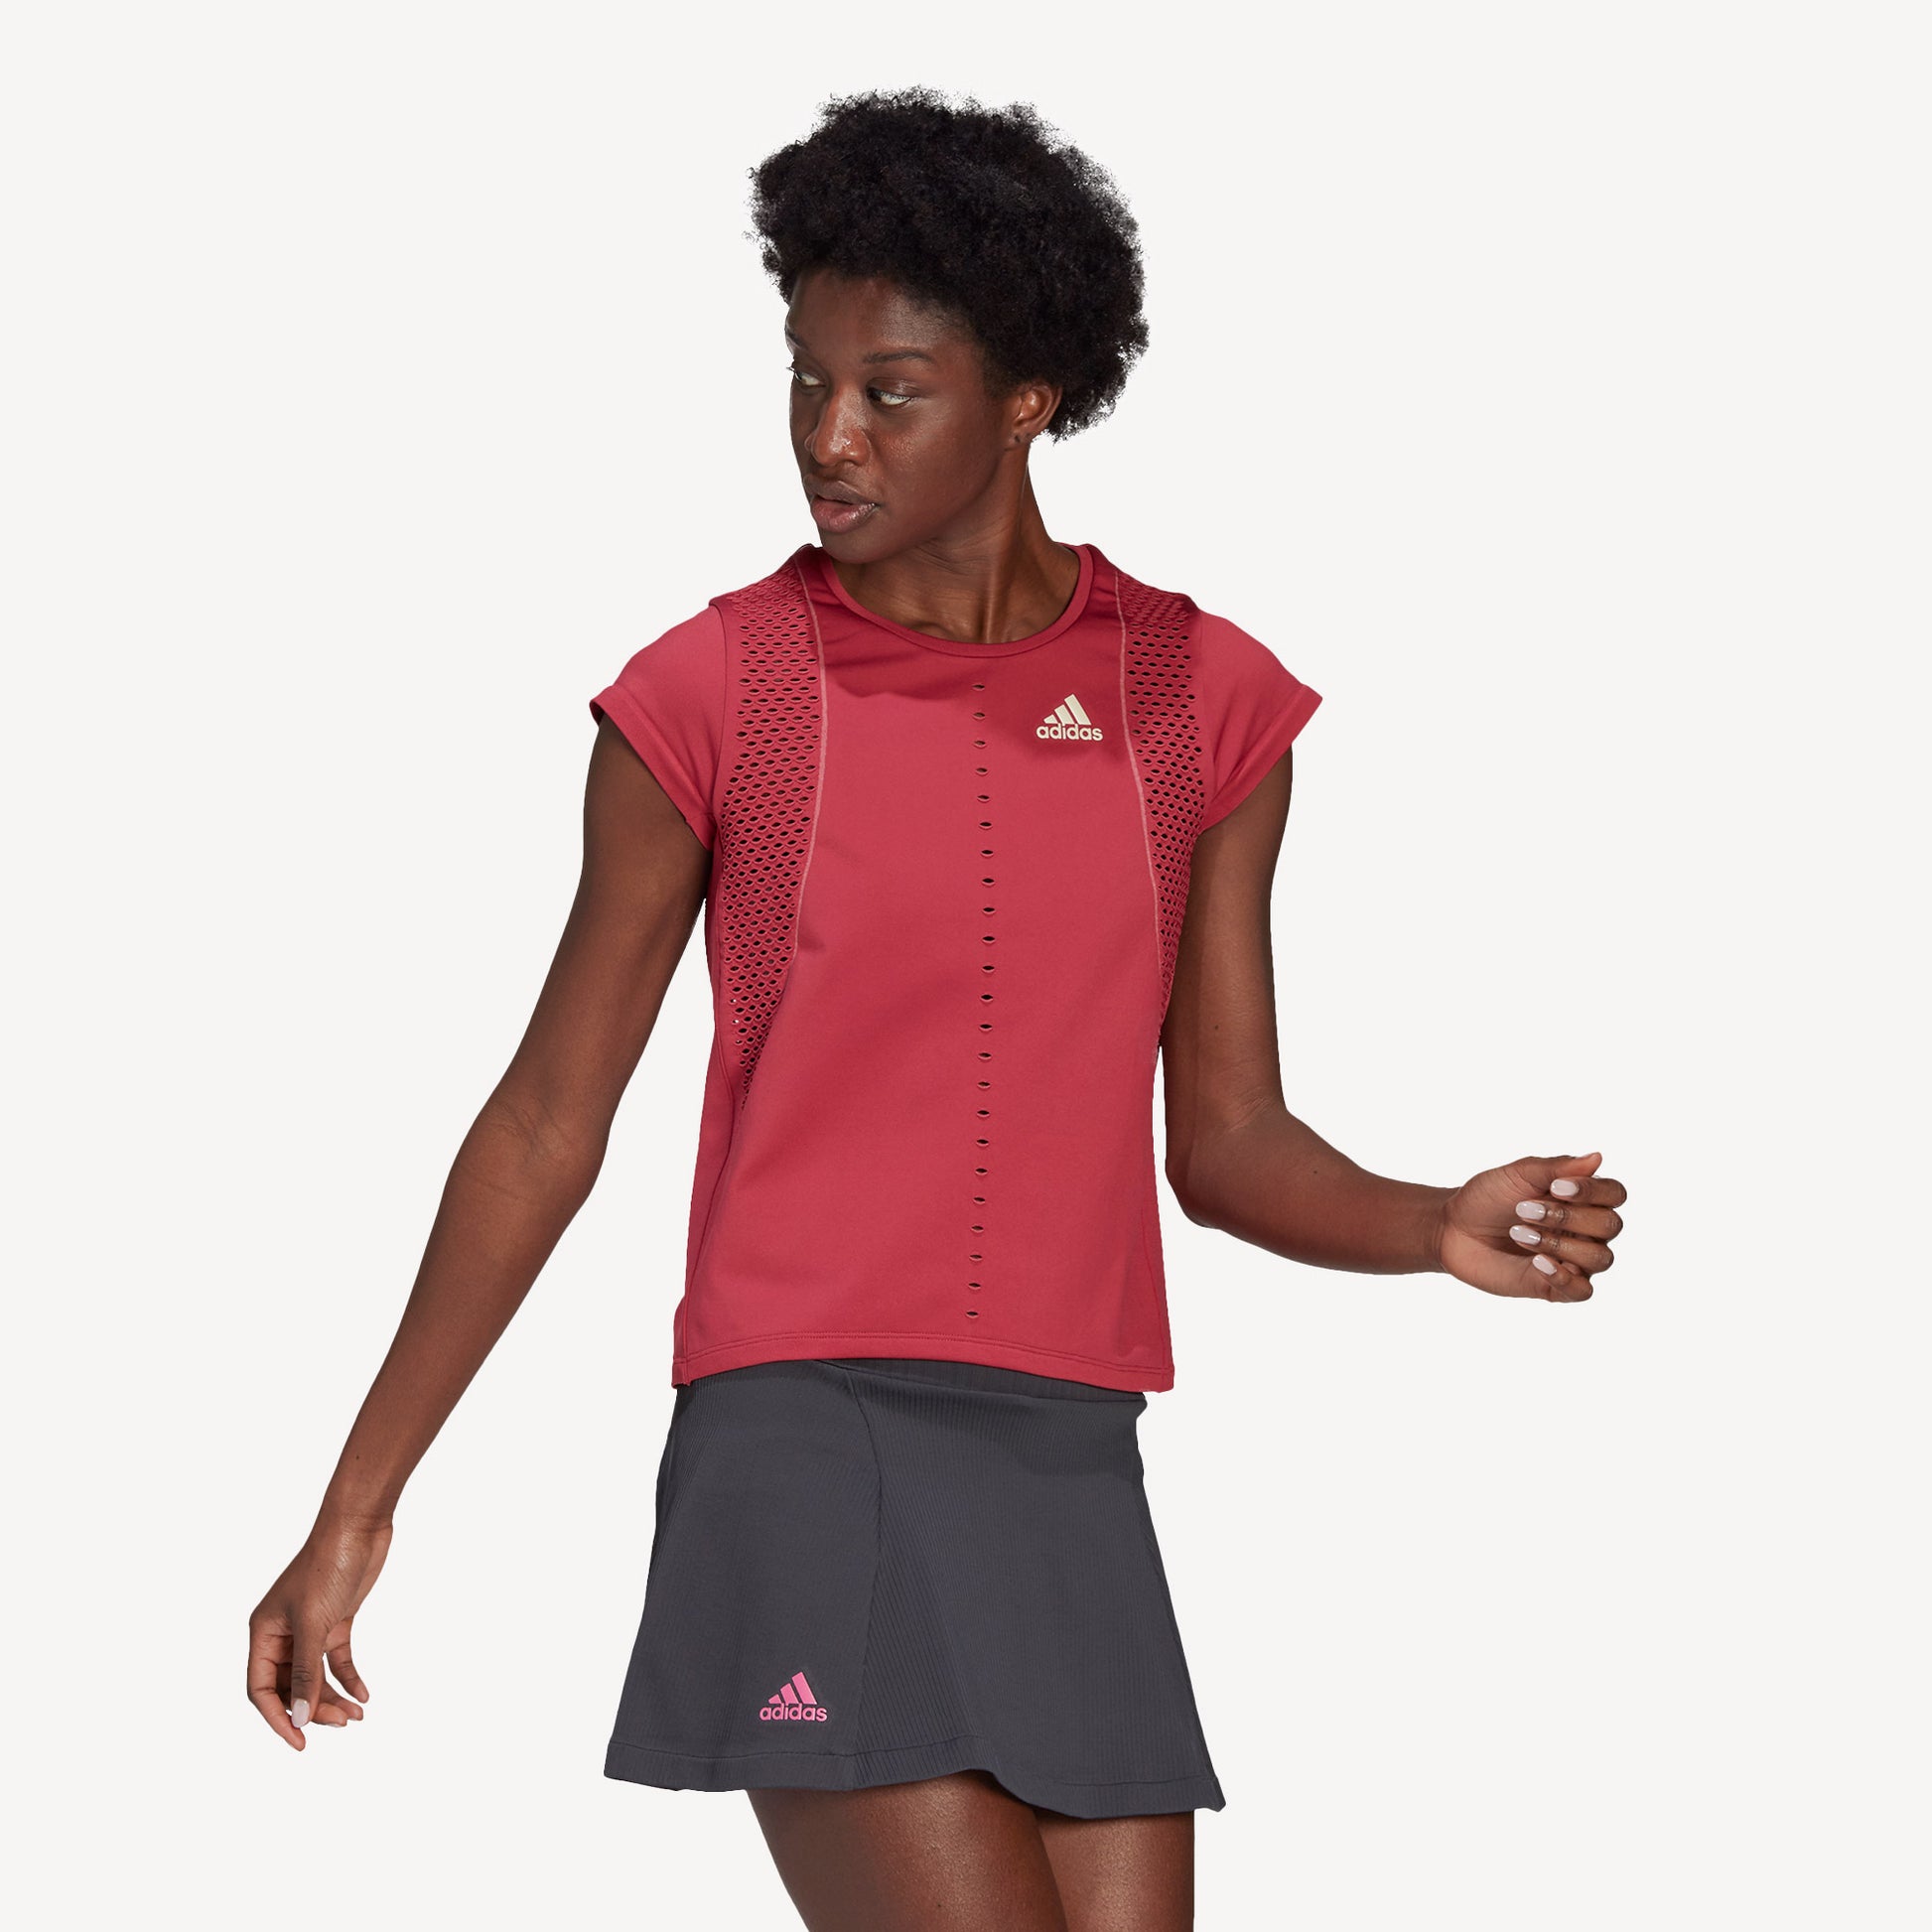 adidas Primeknit Primeblue Women's Tennis Shirt Pink (3)